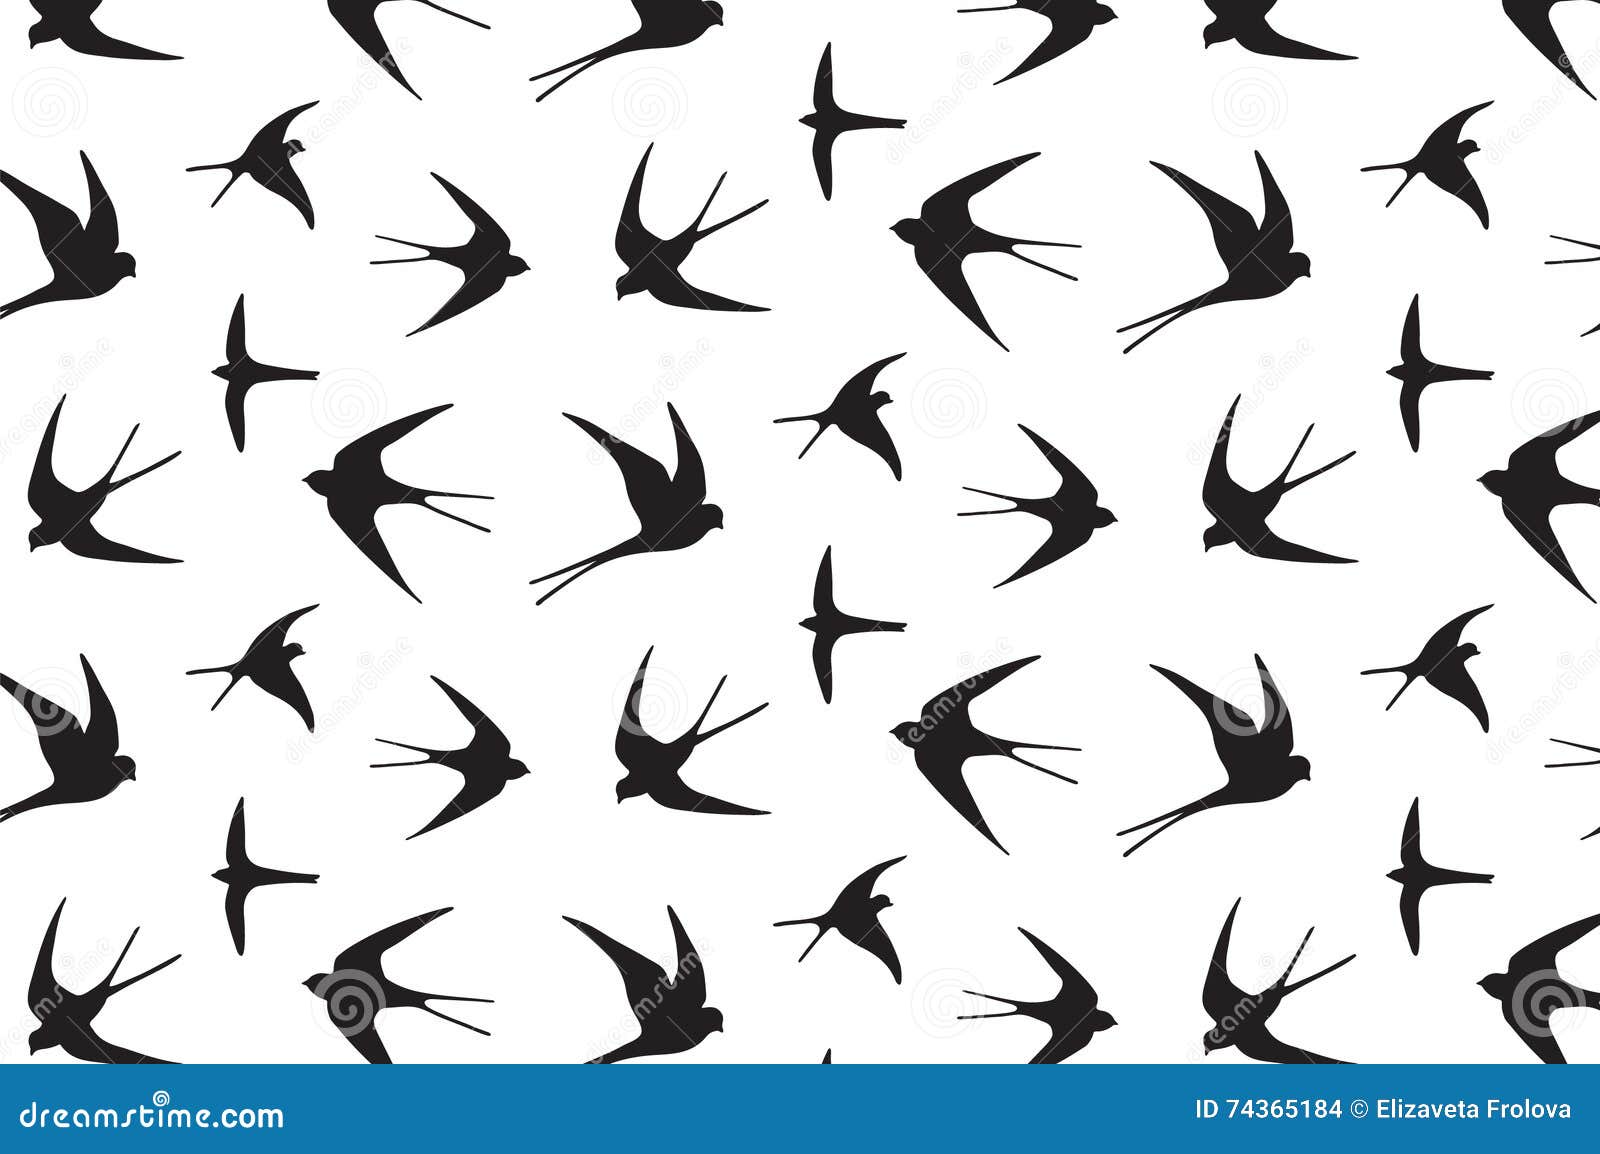 japanese swallow pattern